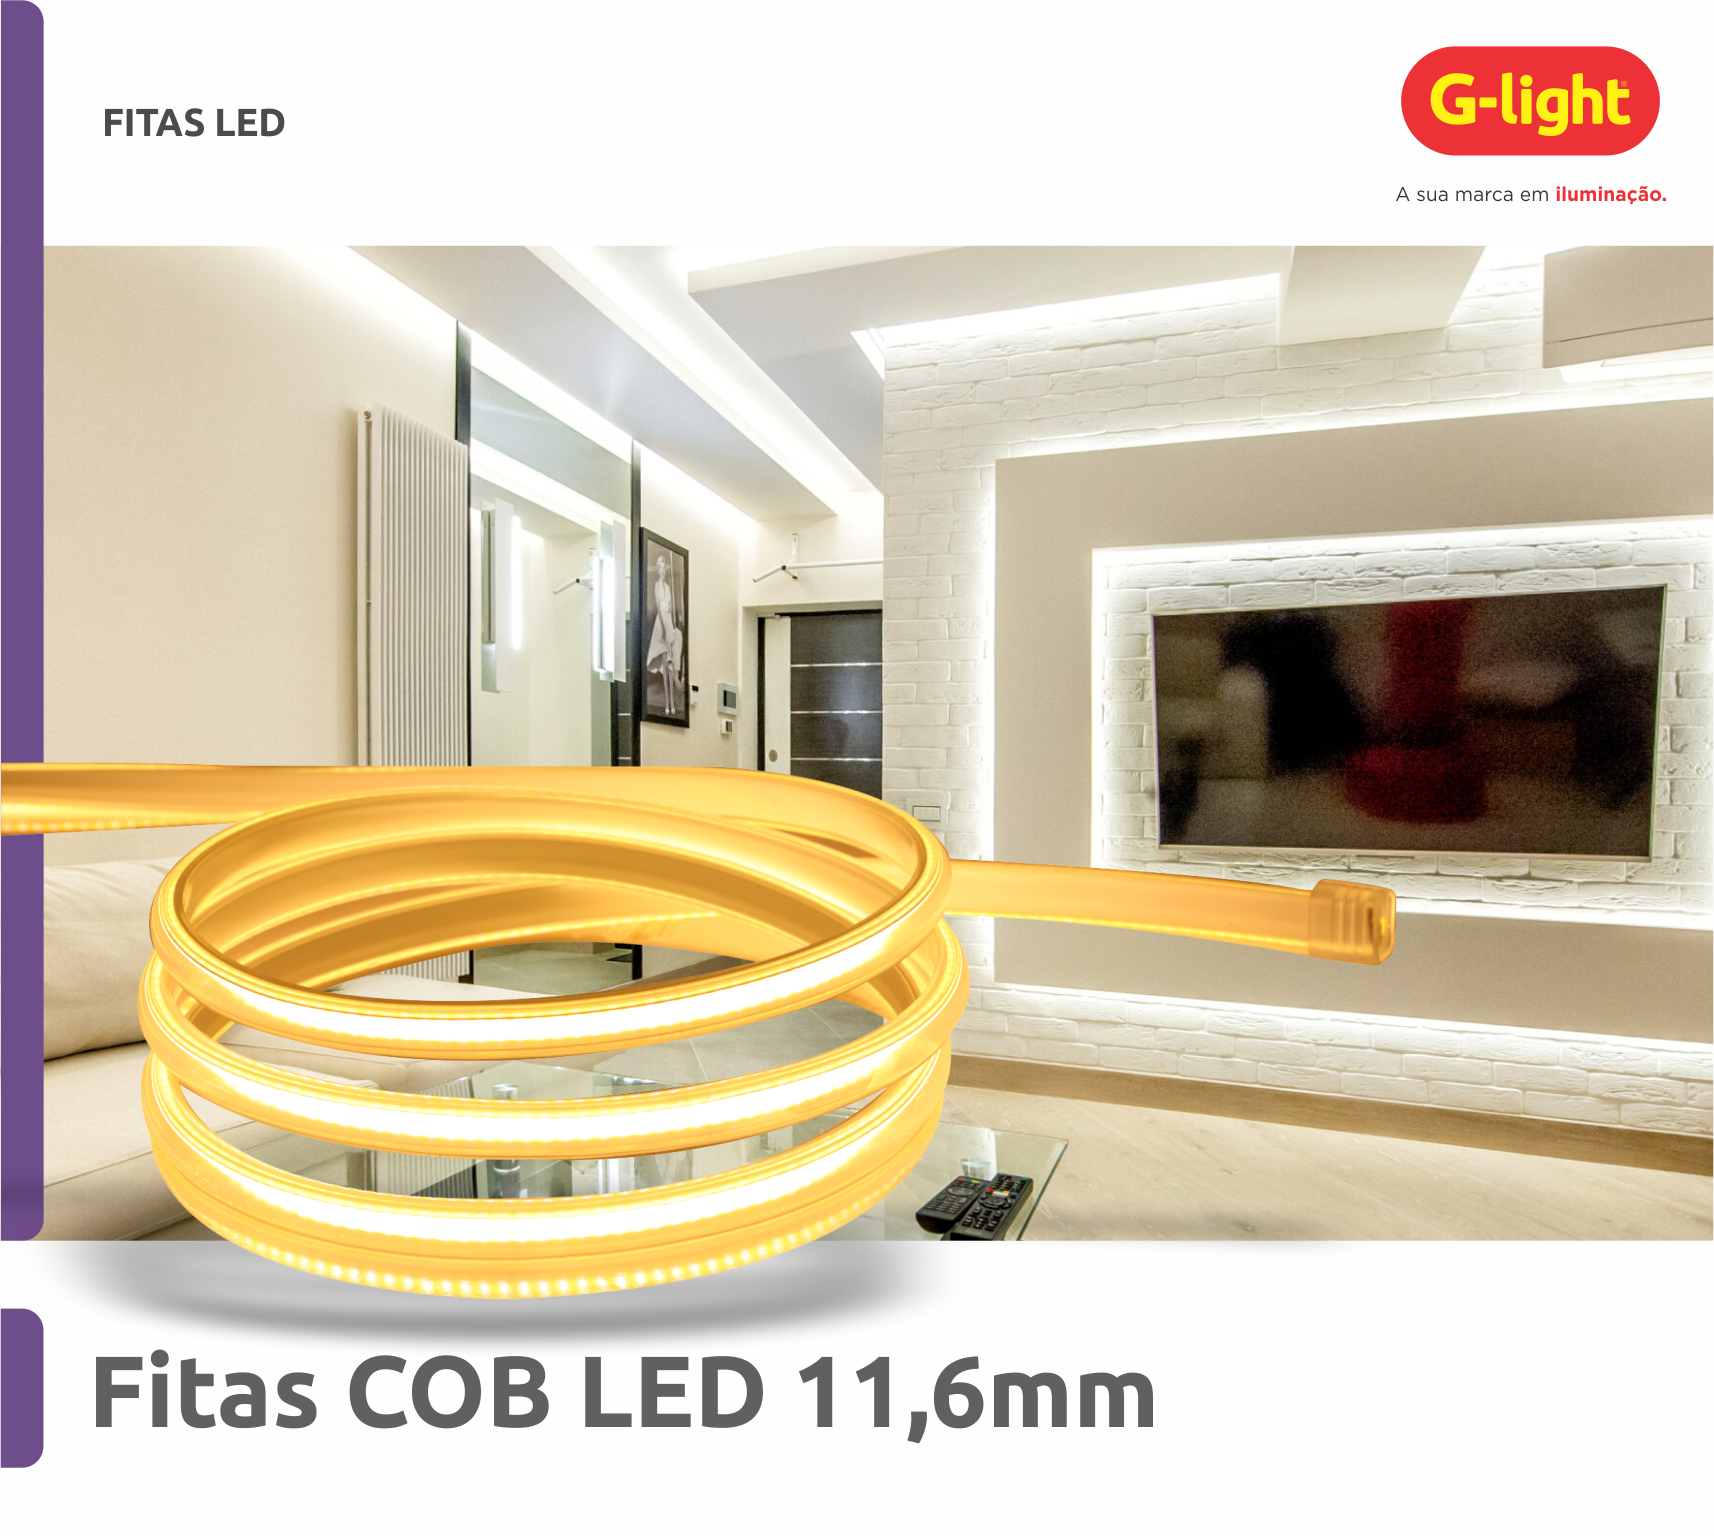 Fitas COB LED 11,6mm